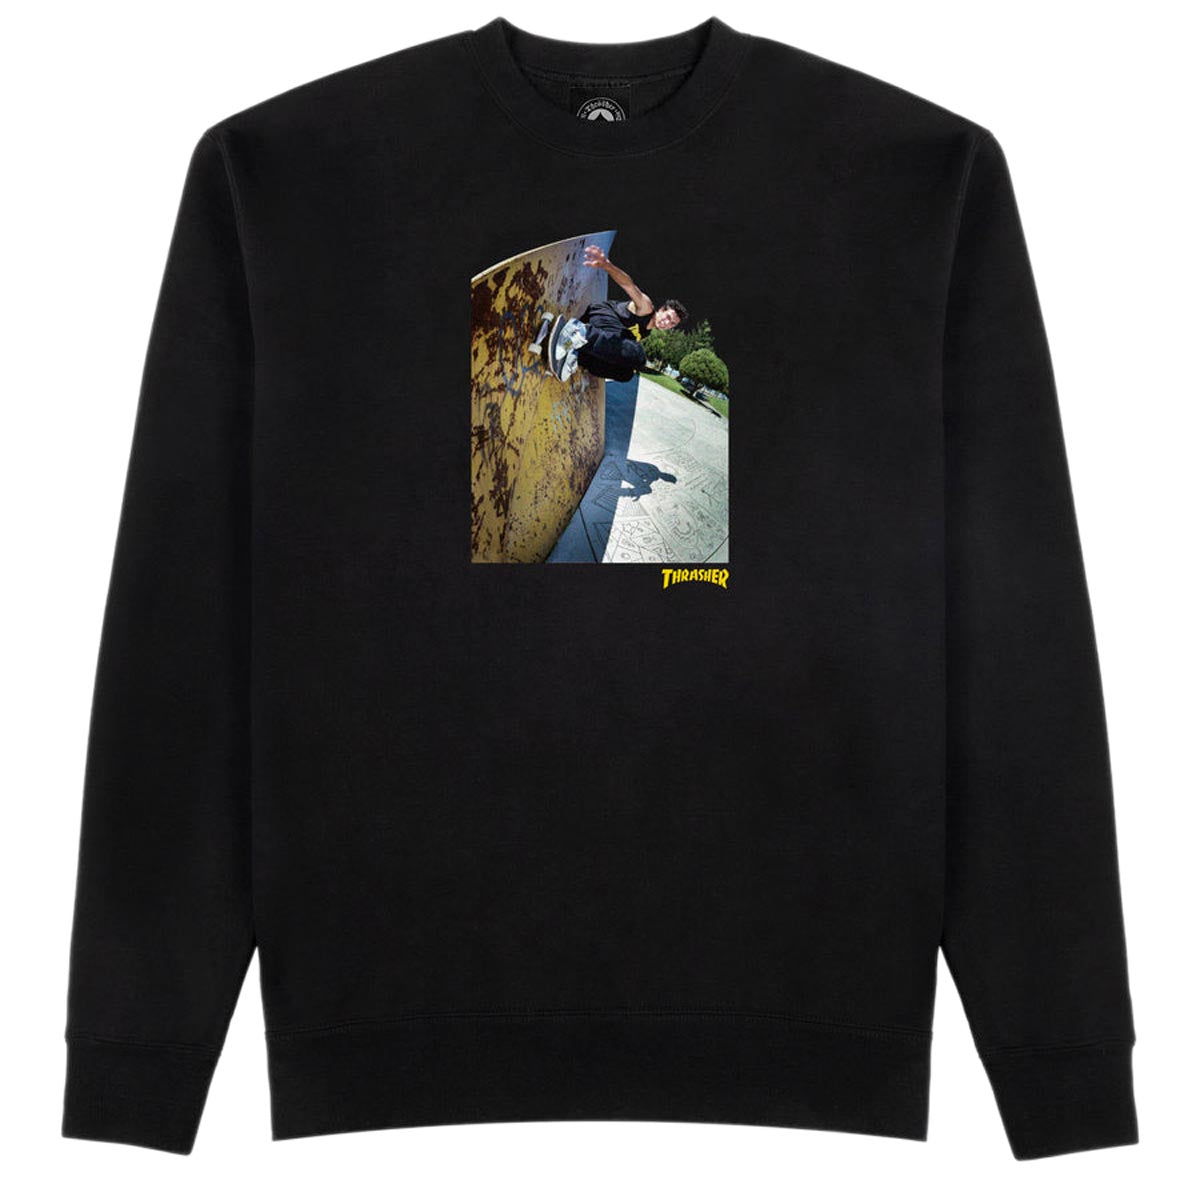 Thrasher Mic-e Wallride Sweatshirt - Black image 1